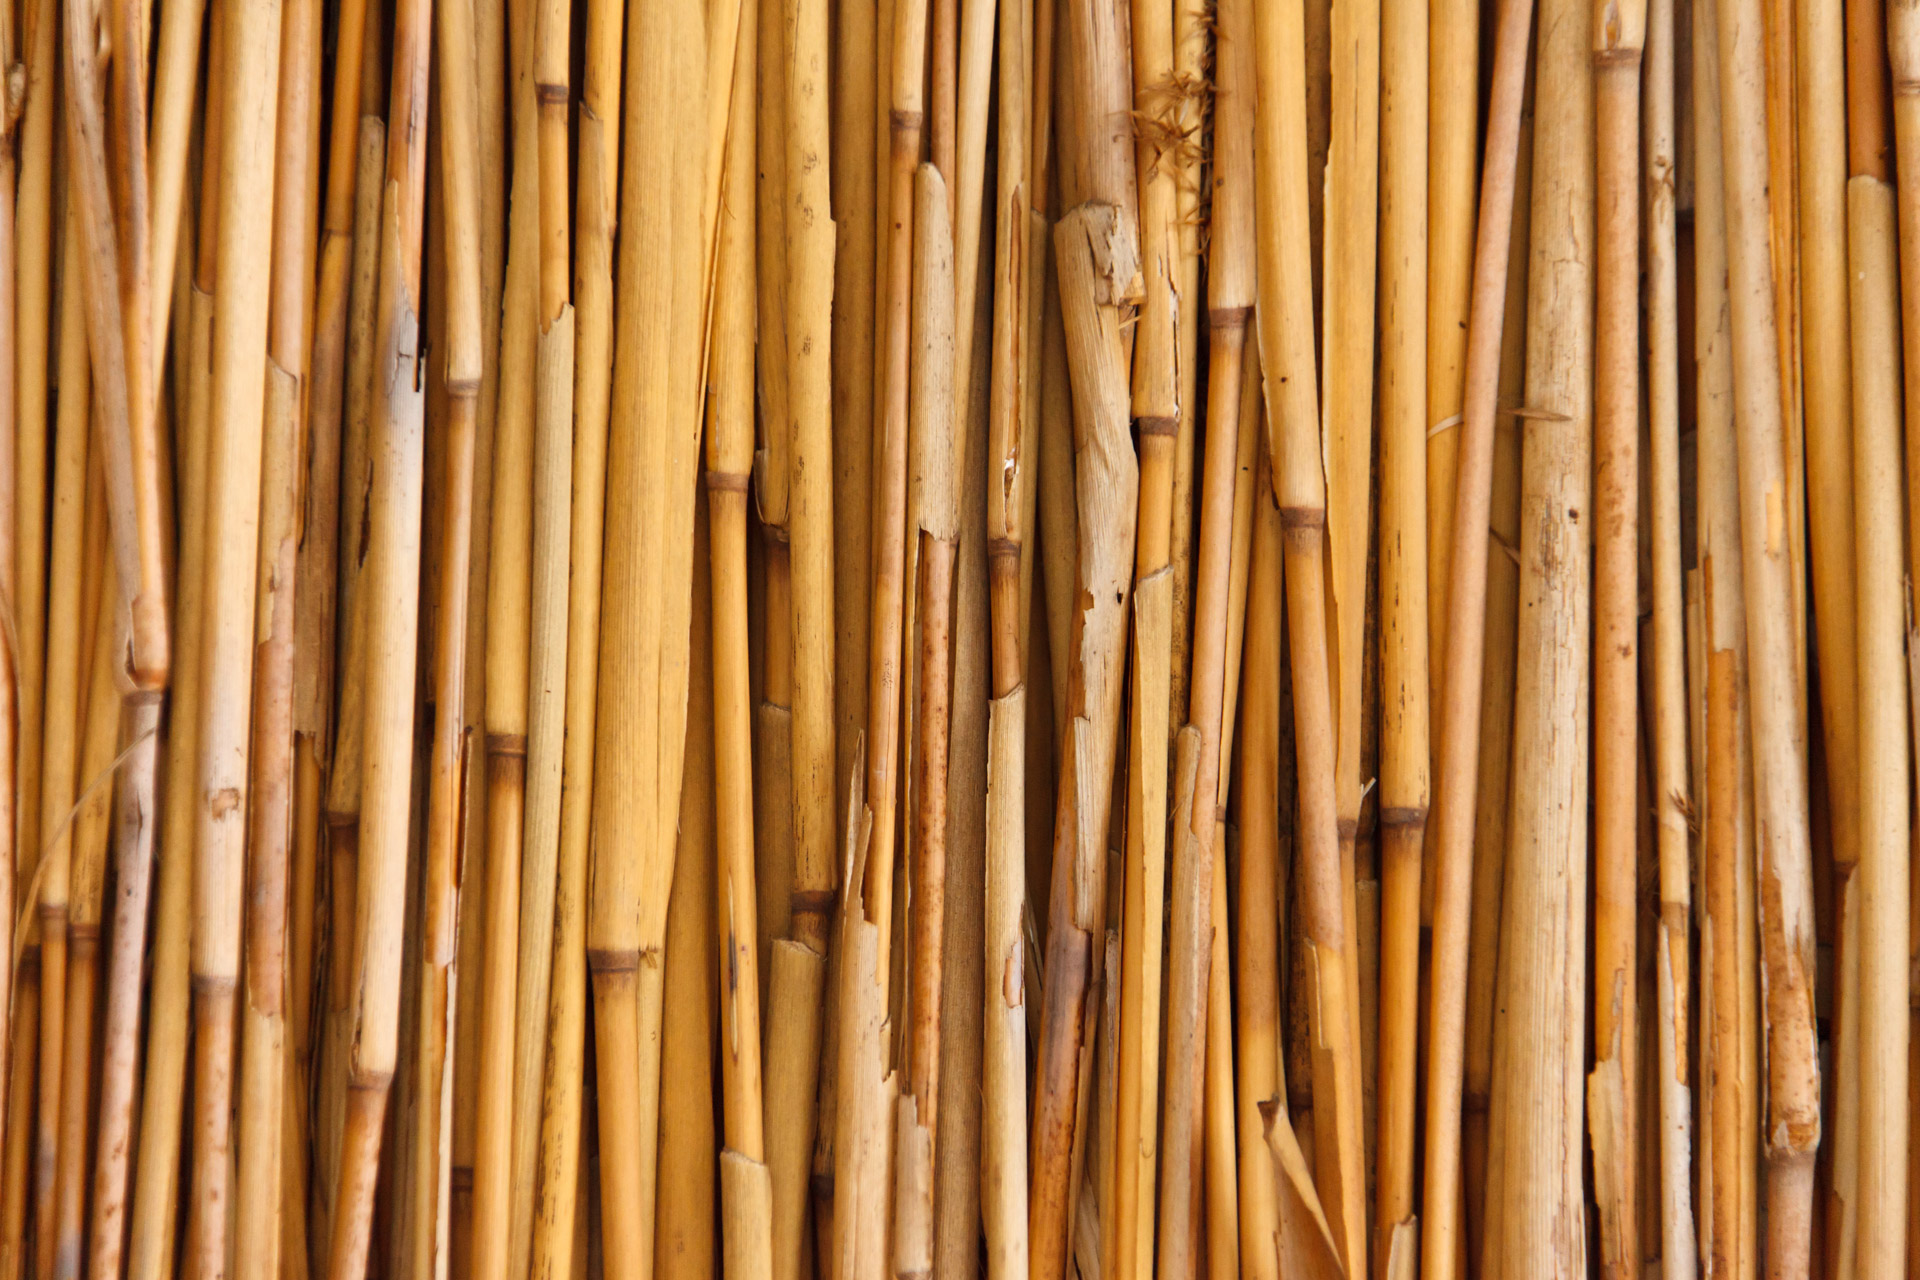 Bamboo Texture Photo Background